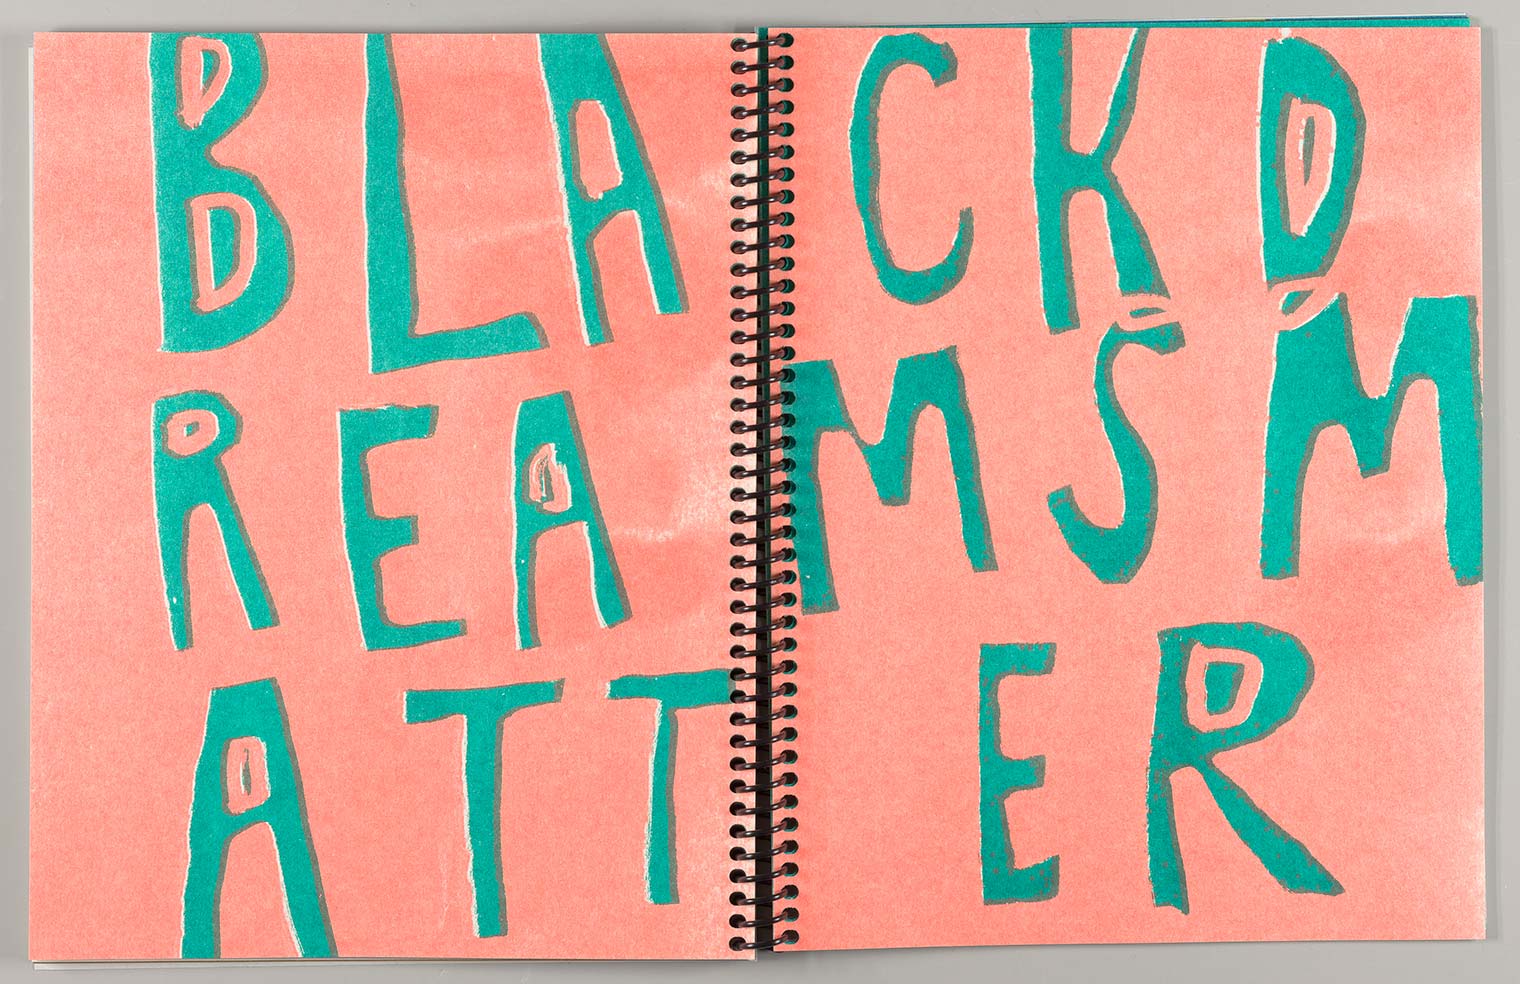 Black dreams matter